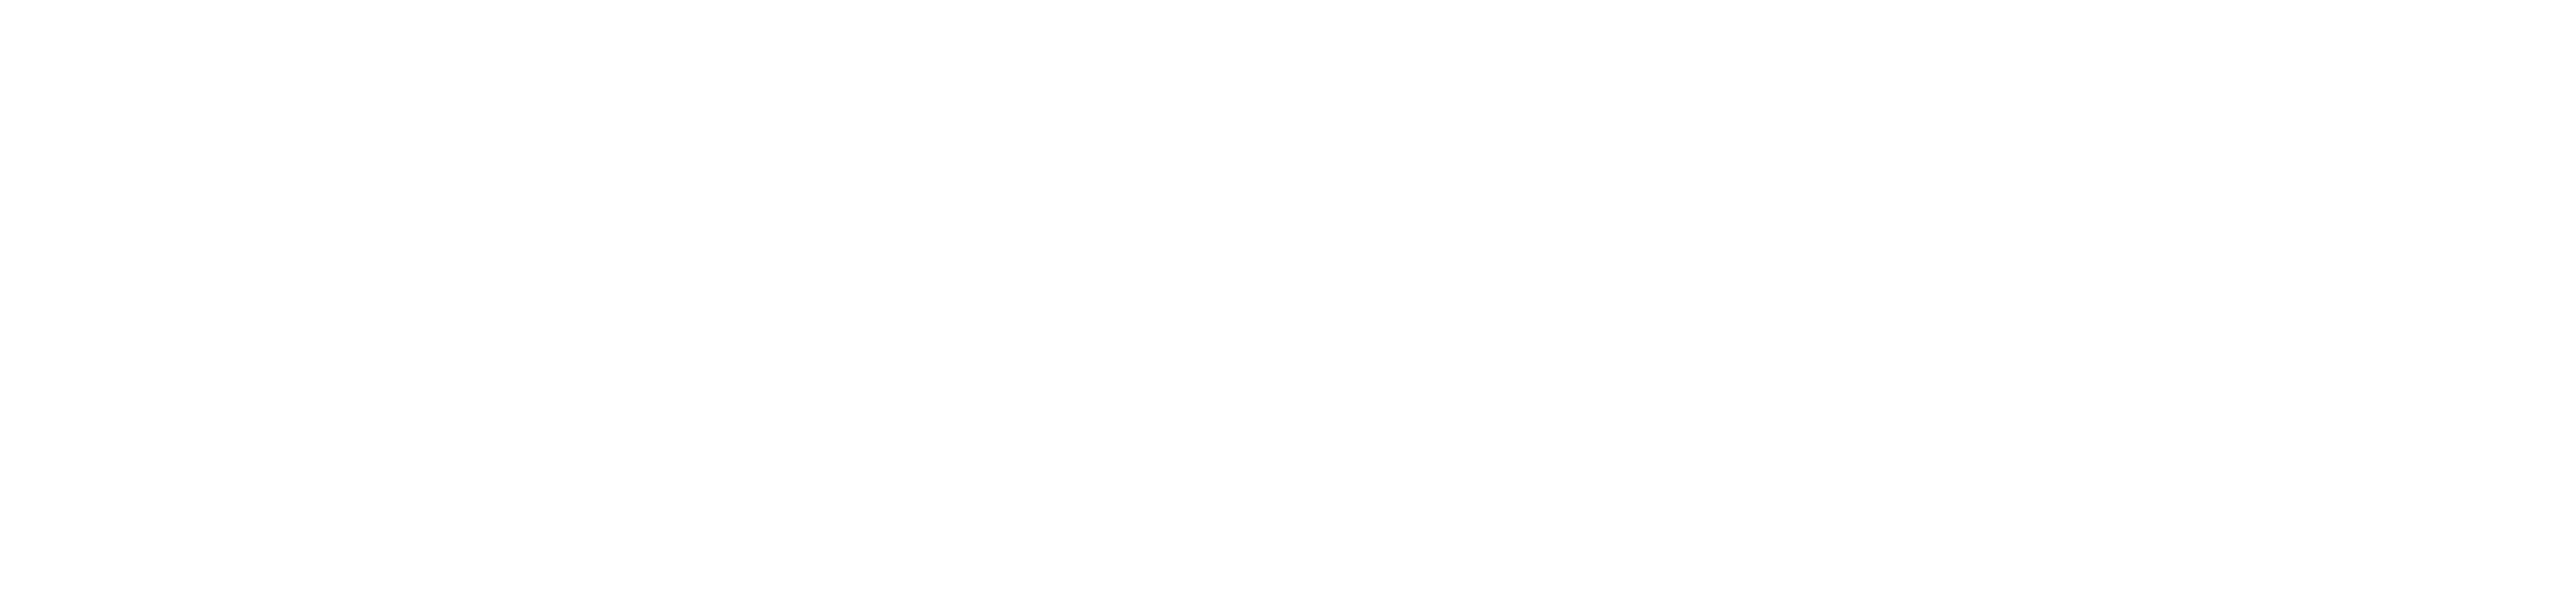 Portfolio Item Logo